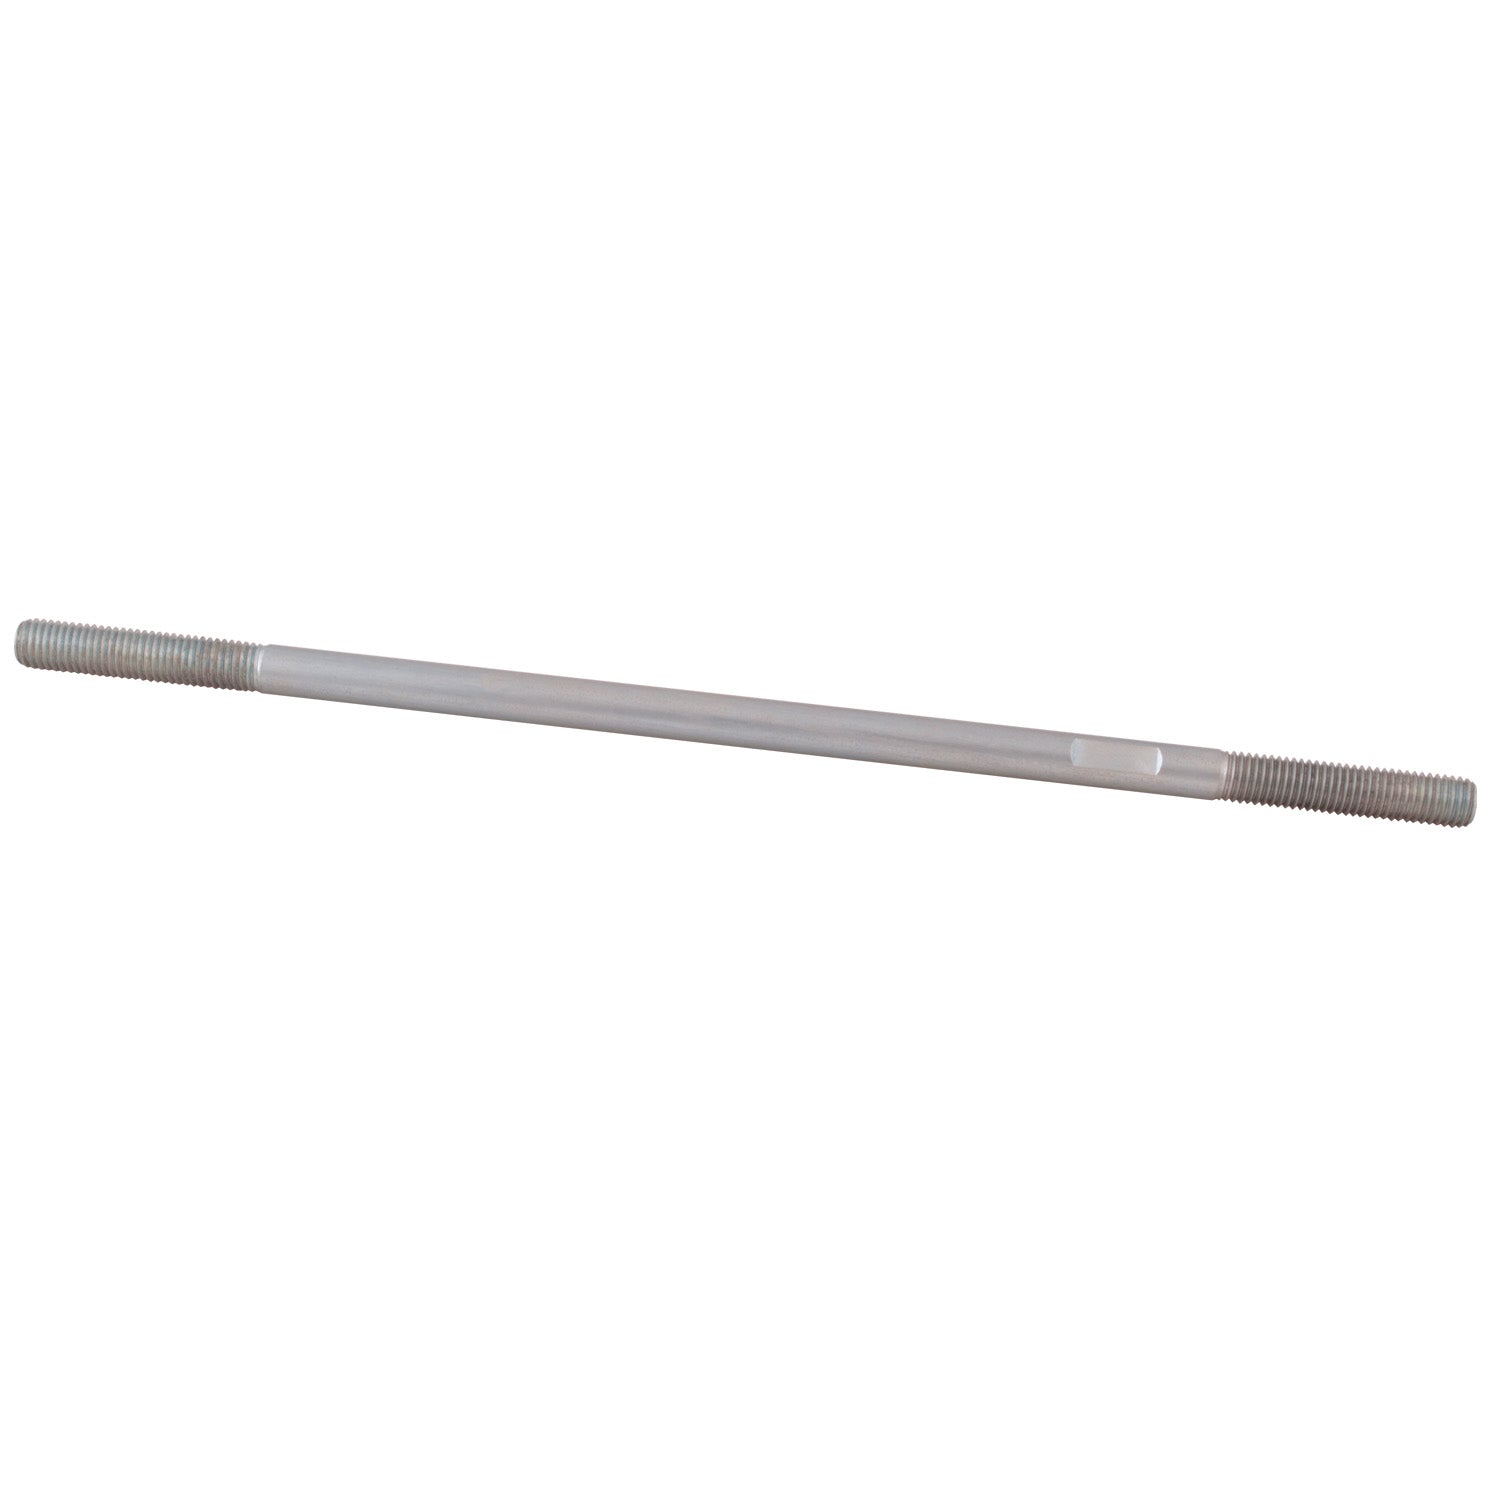 QA1 1698-115 Linkage Rod, Carbon Steel 1/4-28 - 1/4-28 X 7.5 inch Long